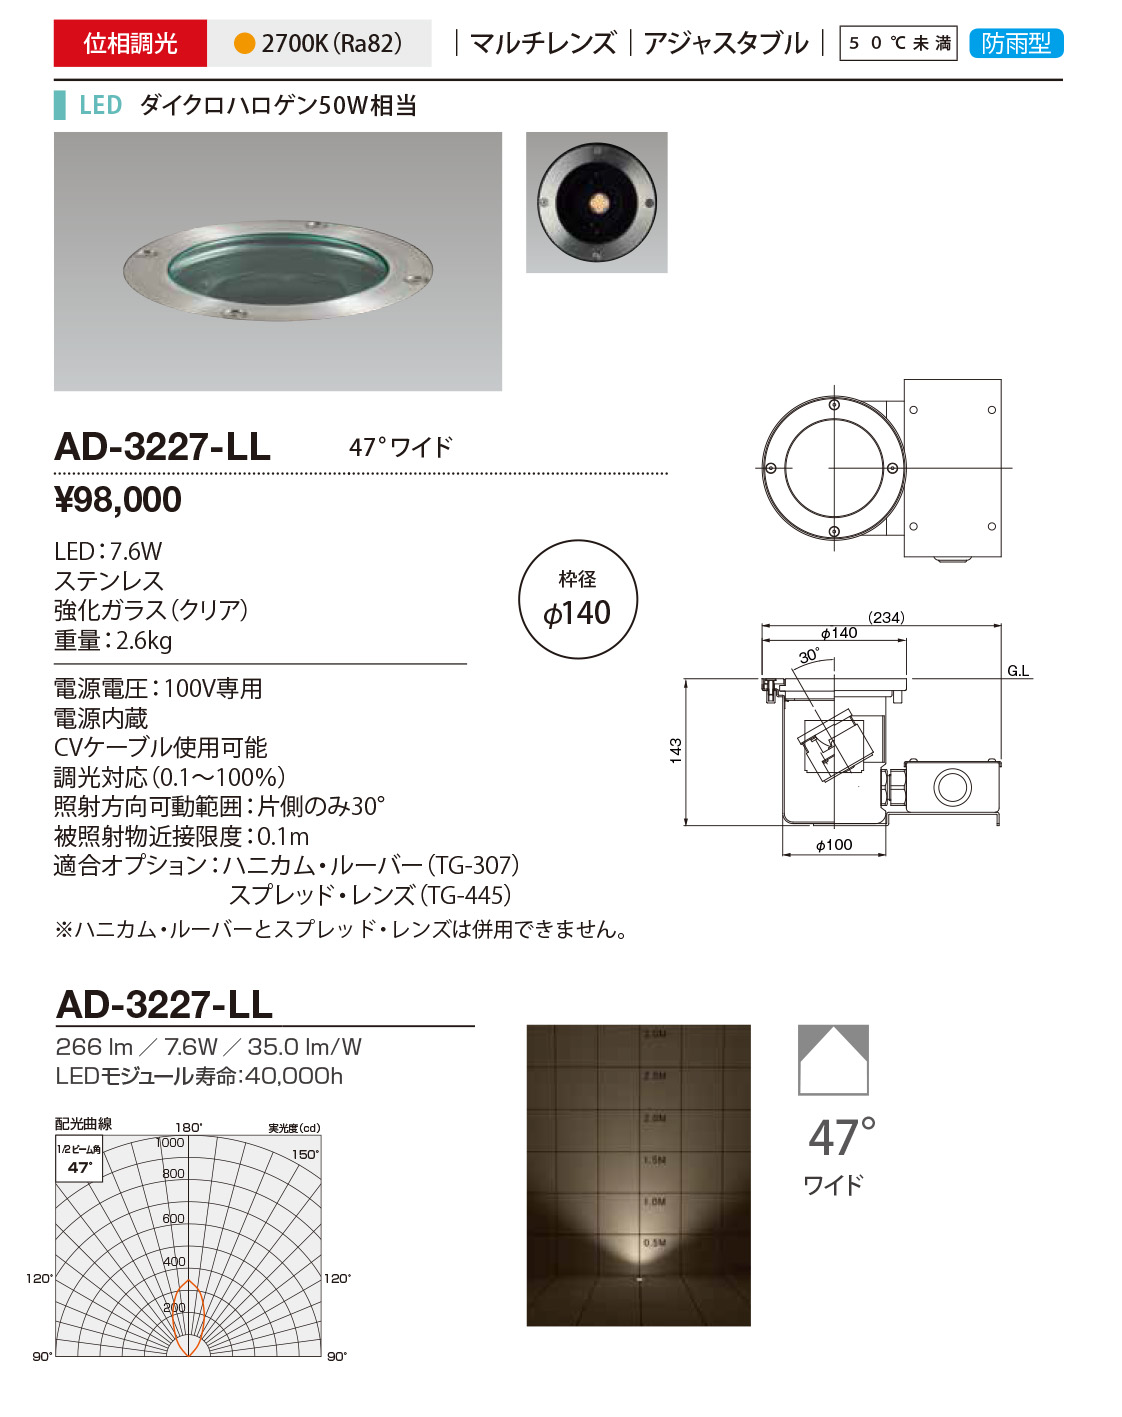 AD-3227-LL(山田照明) 商品詳細 ～ 照明器具・換気扇他、電設資材販売のブライト